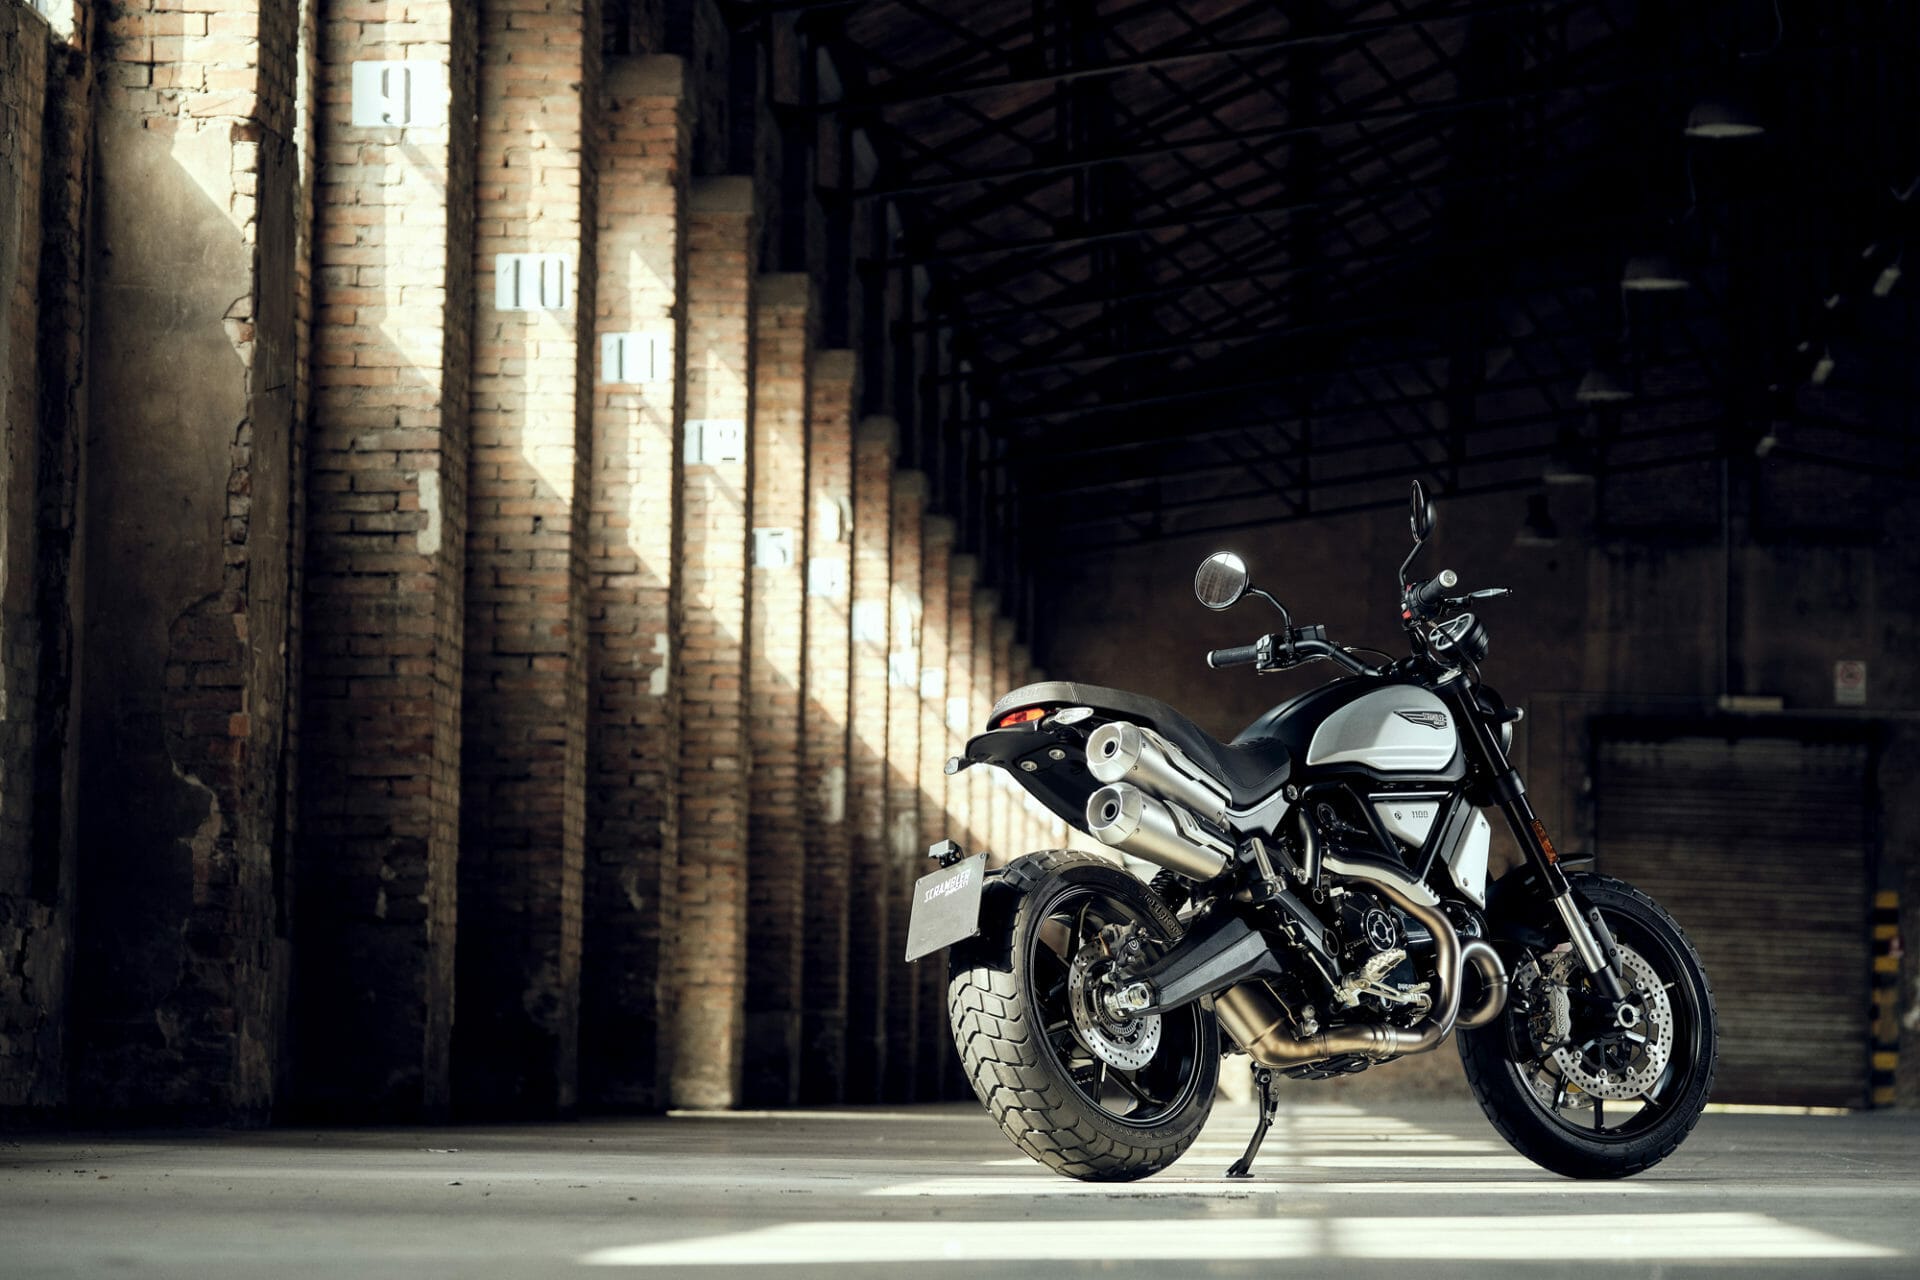 Ducati Scrambler 1100 Dark PRO
- also in the App MOTORCYCLE NEWS